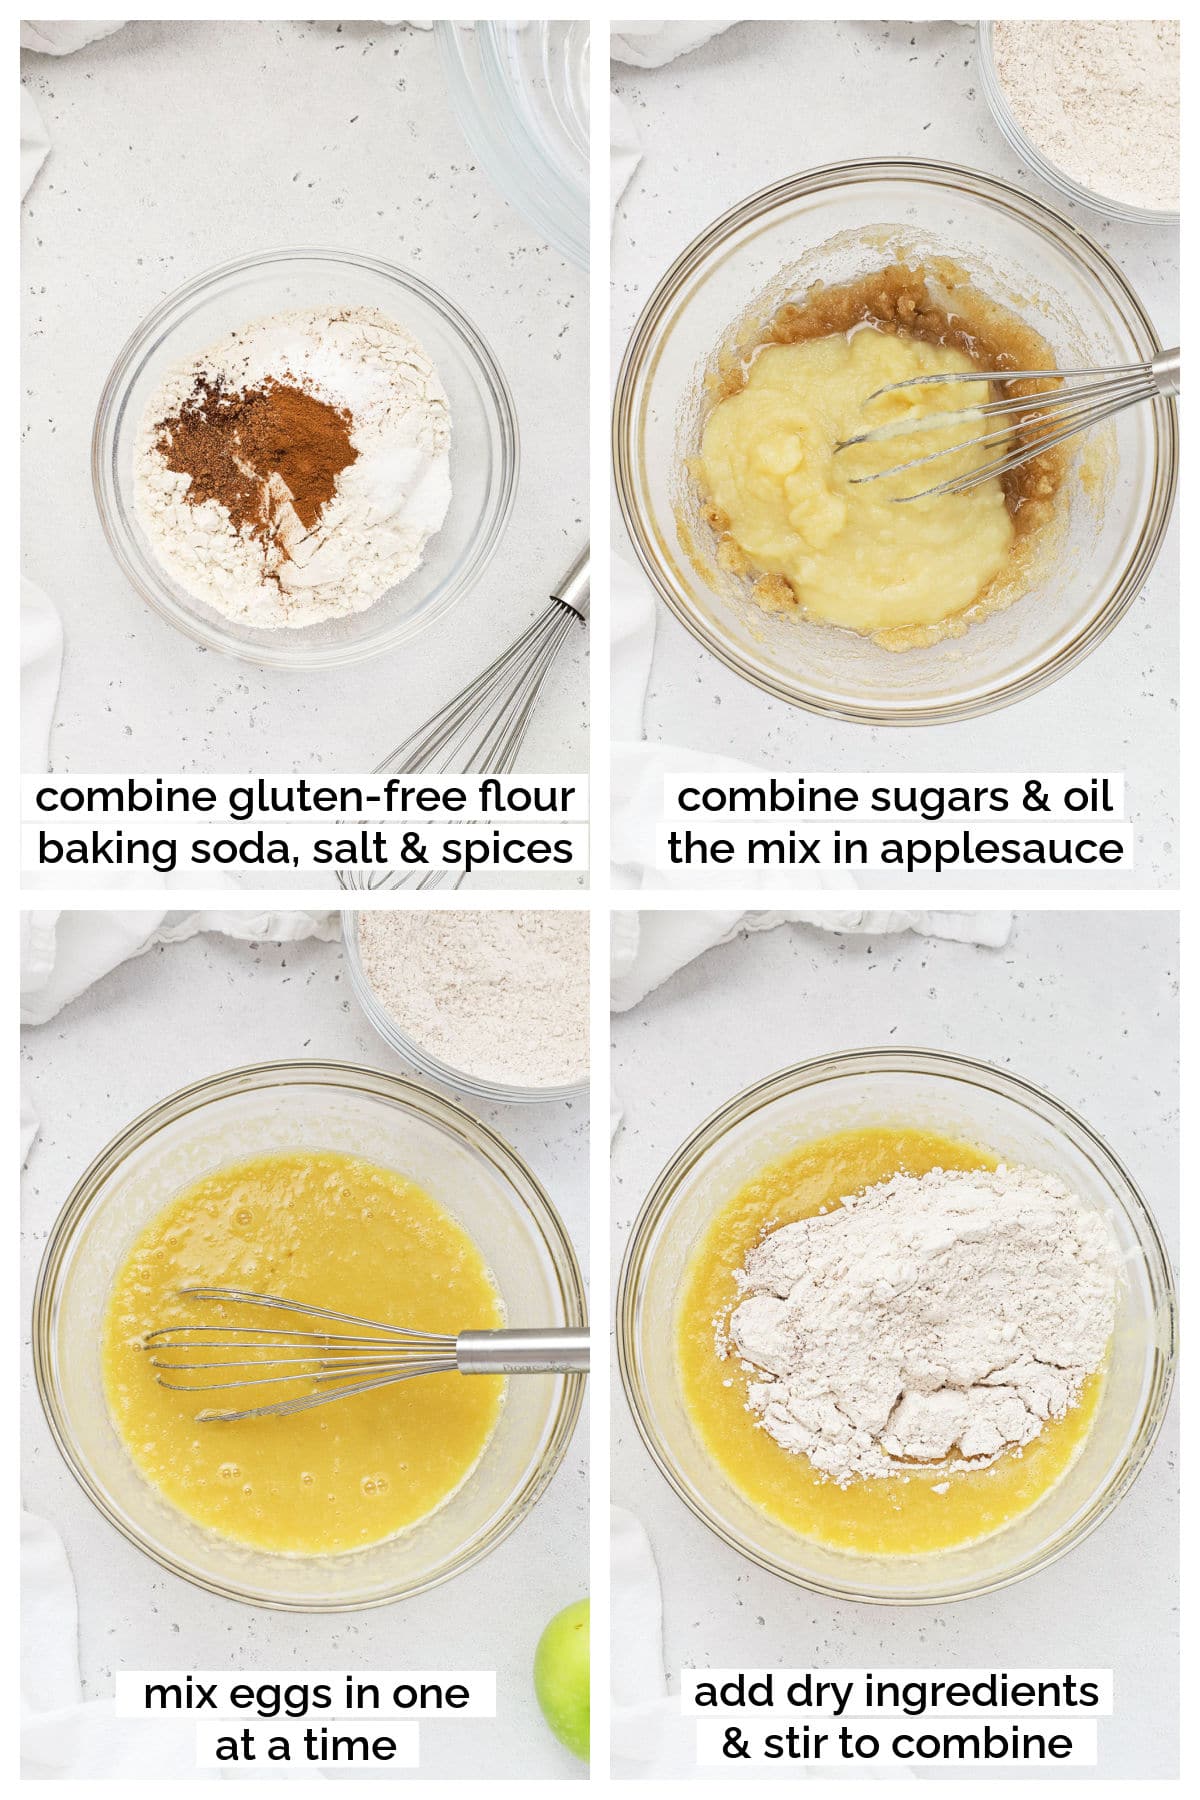 making gluten-free applesauce muffins step by step